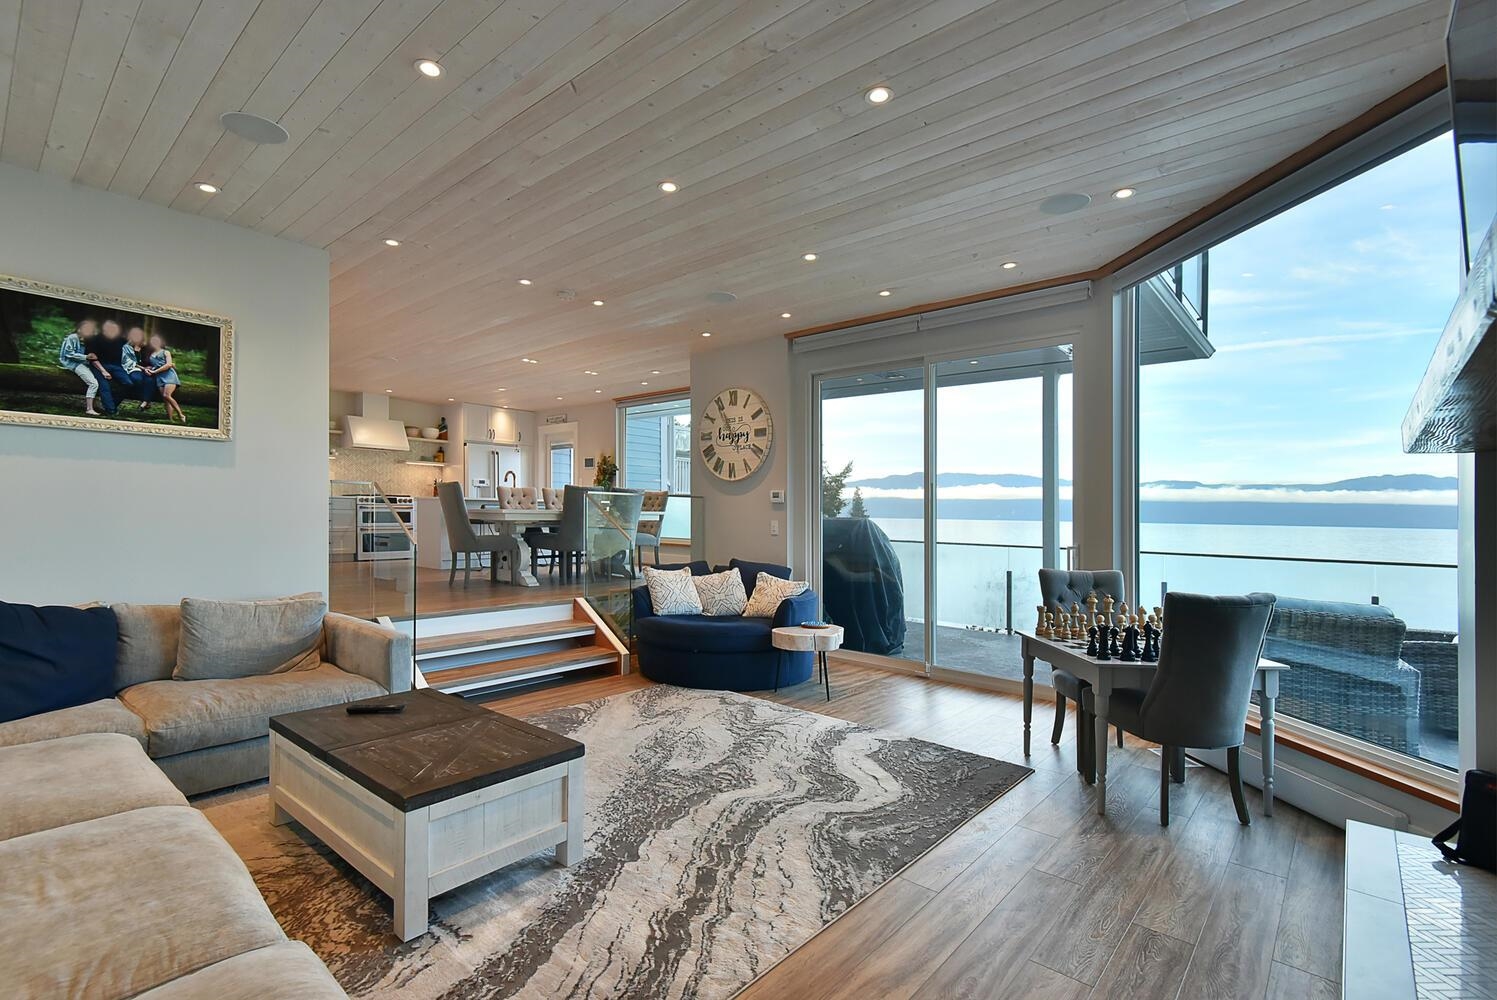 Pender Harbour Egmont House/Single Family for sale:  5 bedroom 2,786 sq.ft. (Listed 2106-02-06)